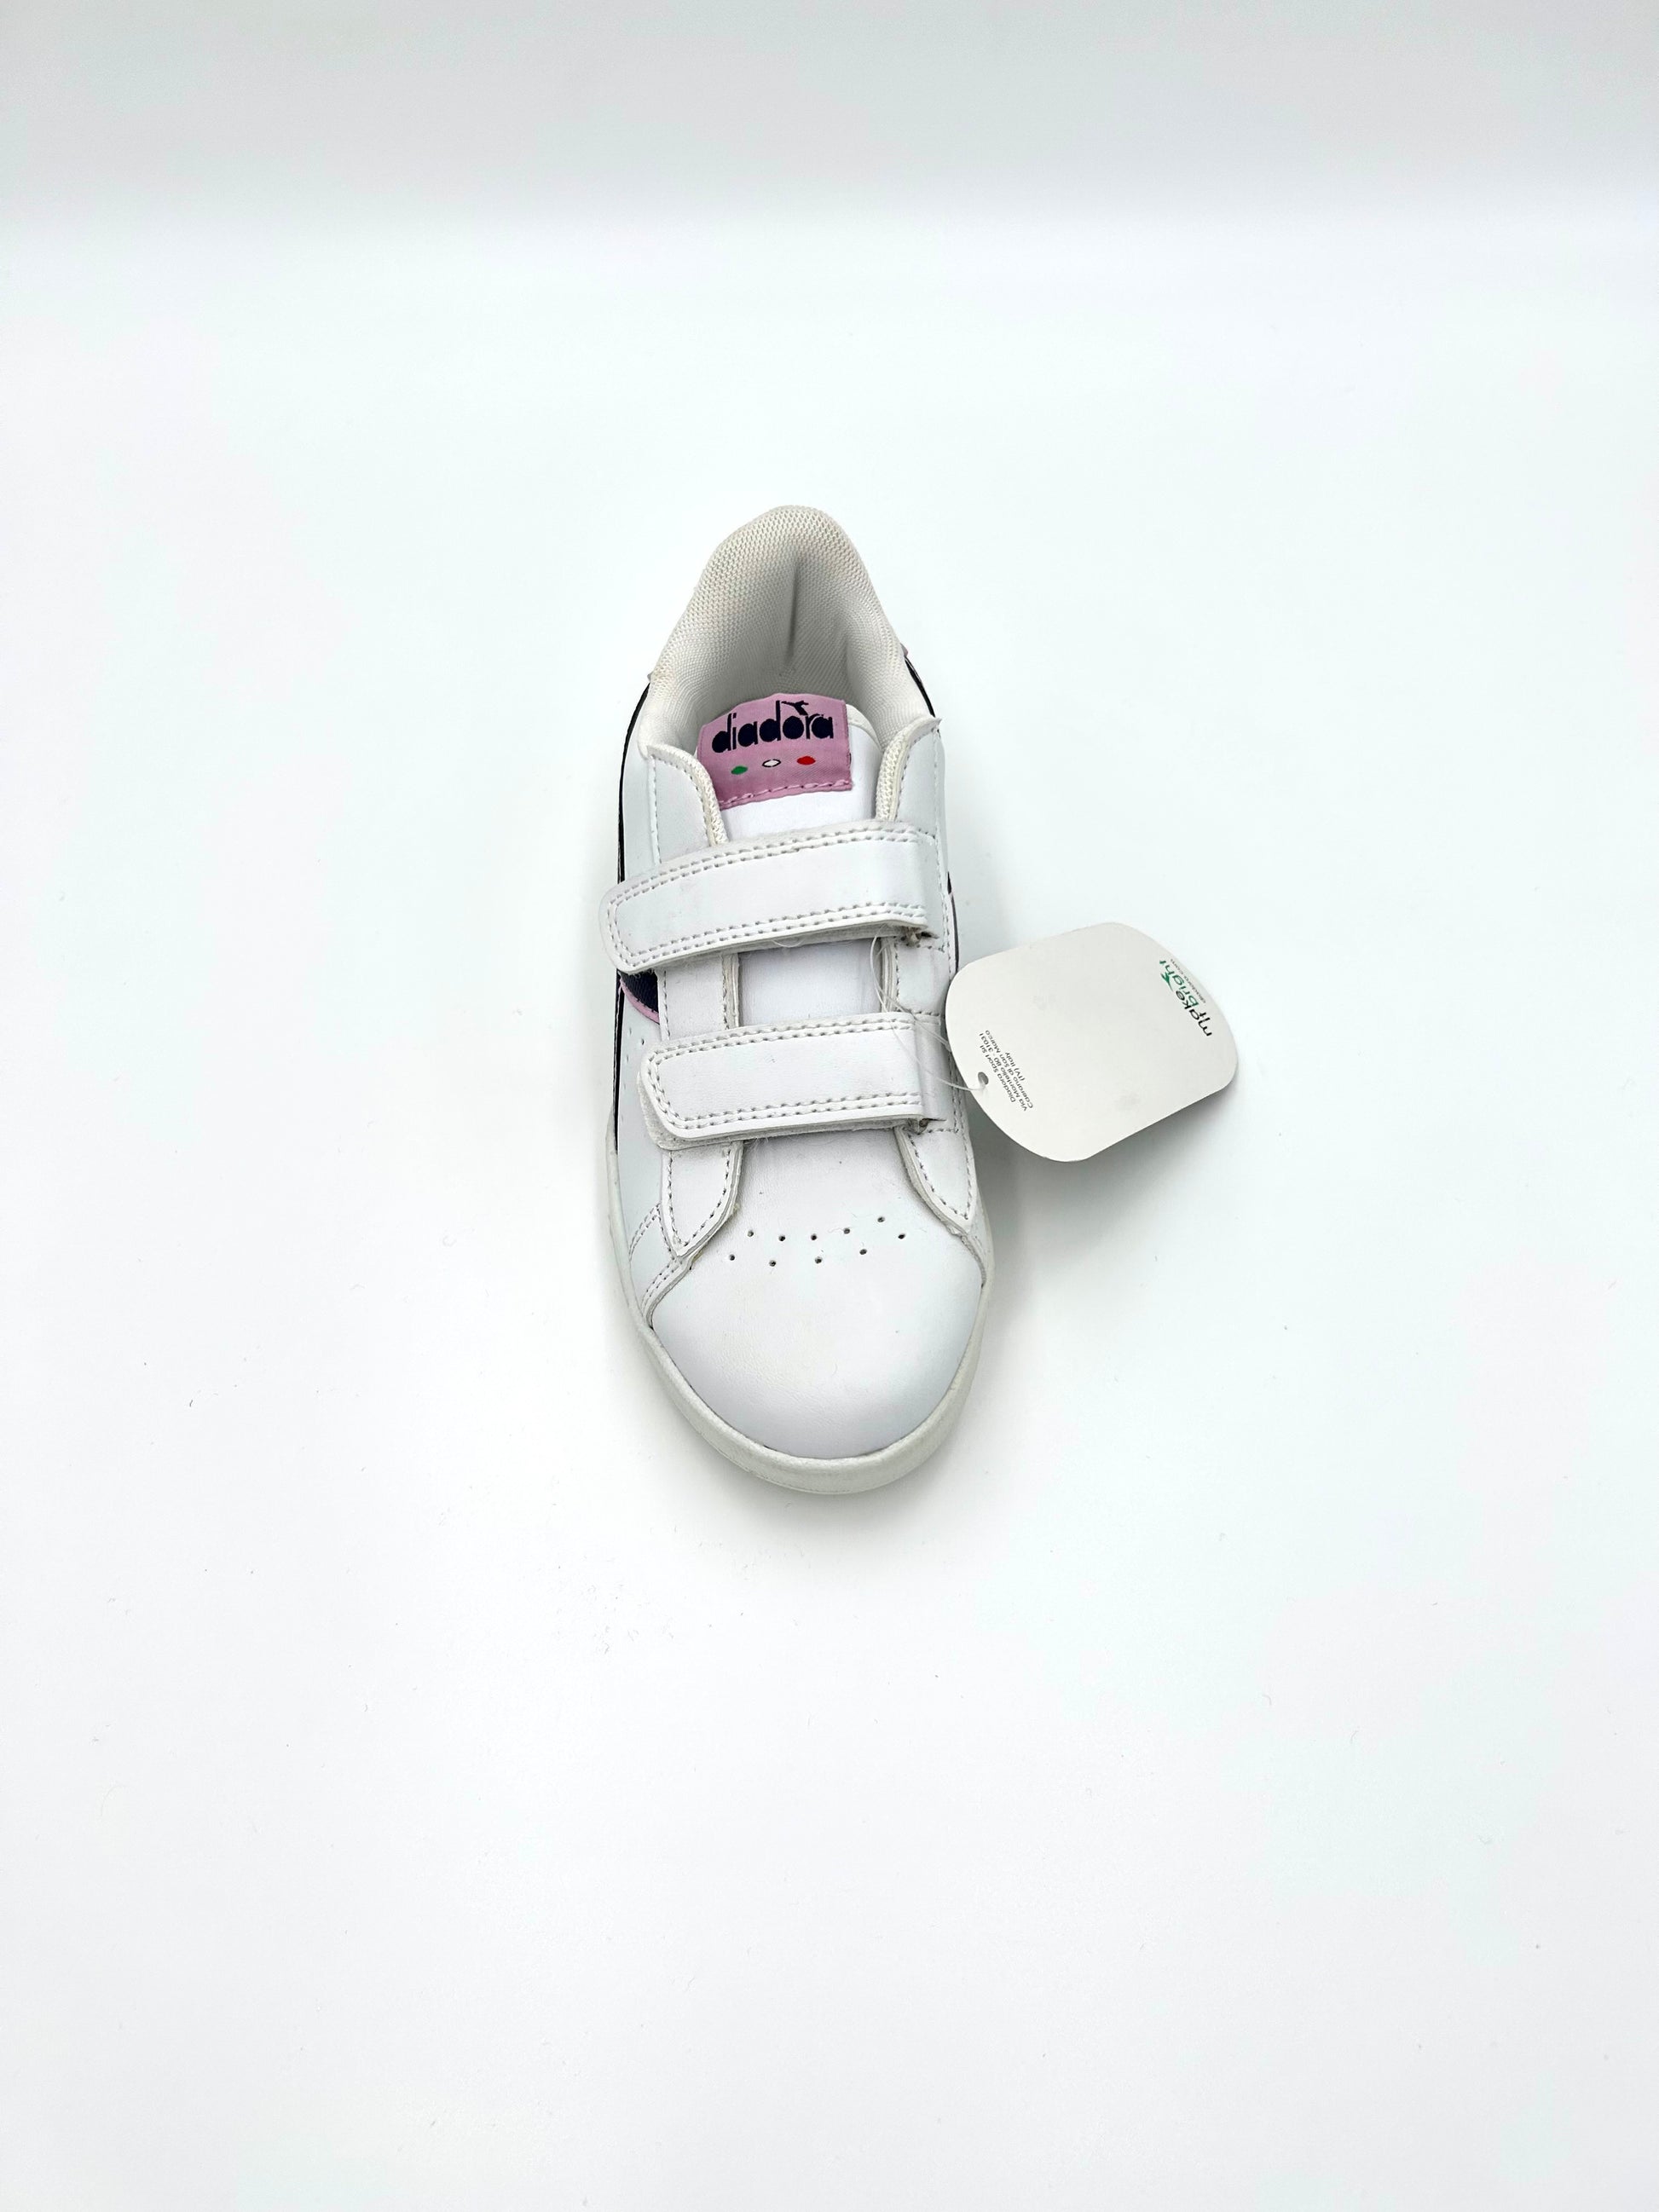 Diadora Sneakers Game P ps - white and purple - Diadora